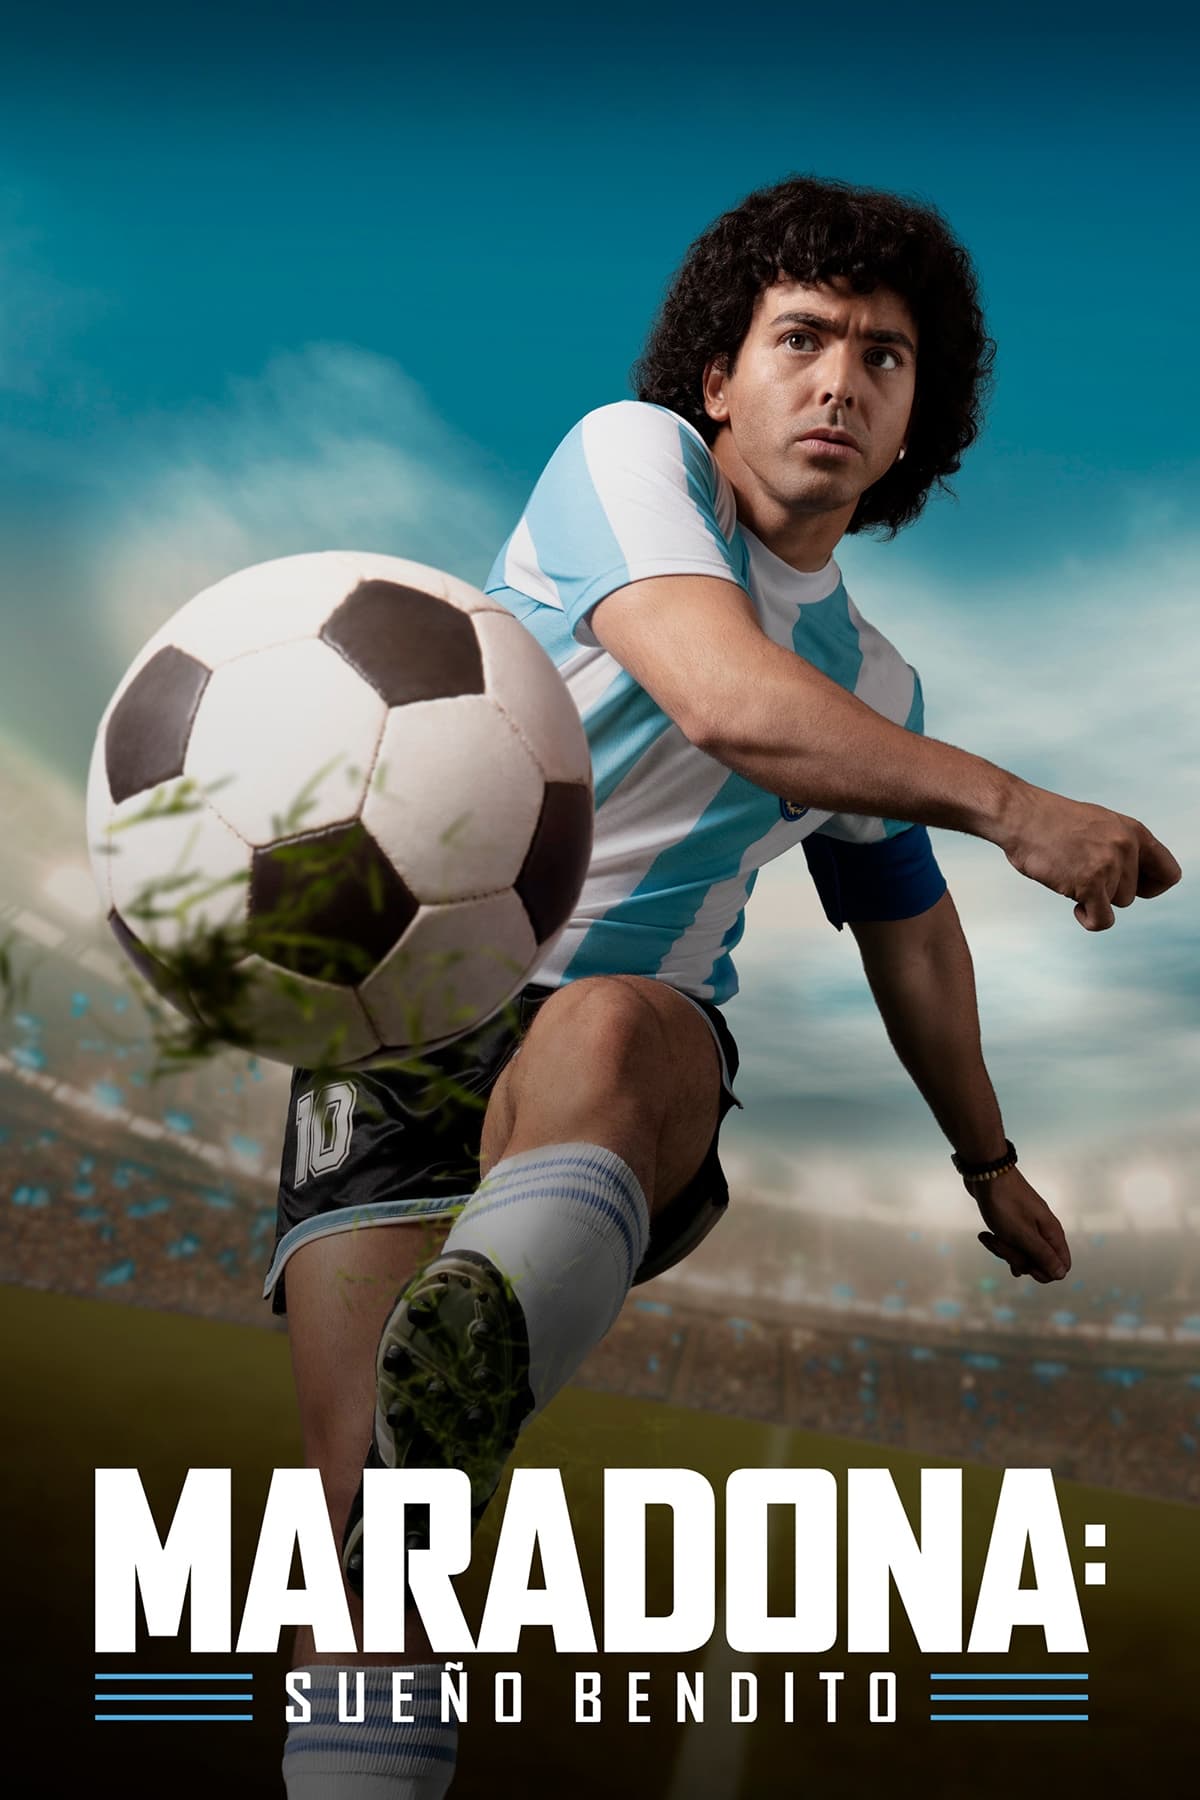 Maradona: Blessed Dream Season 1